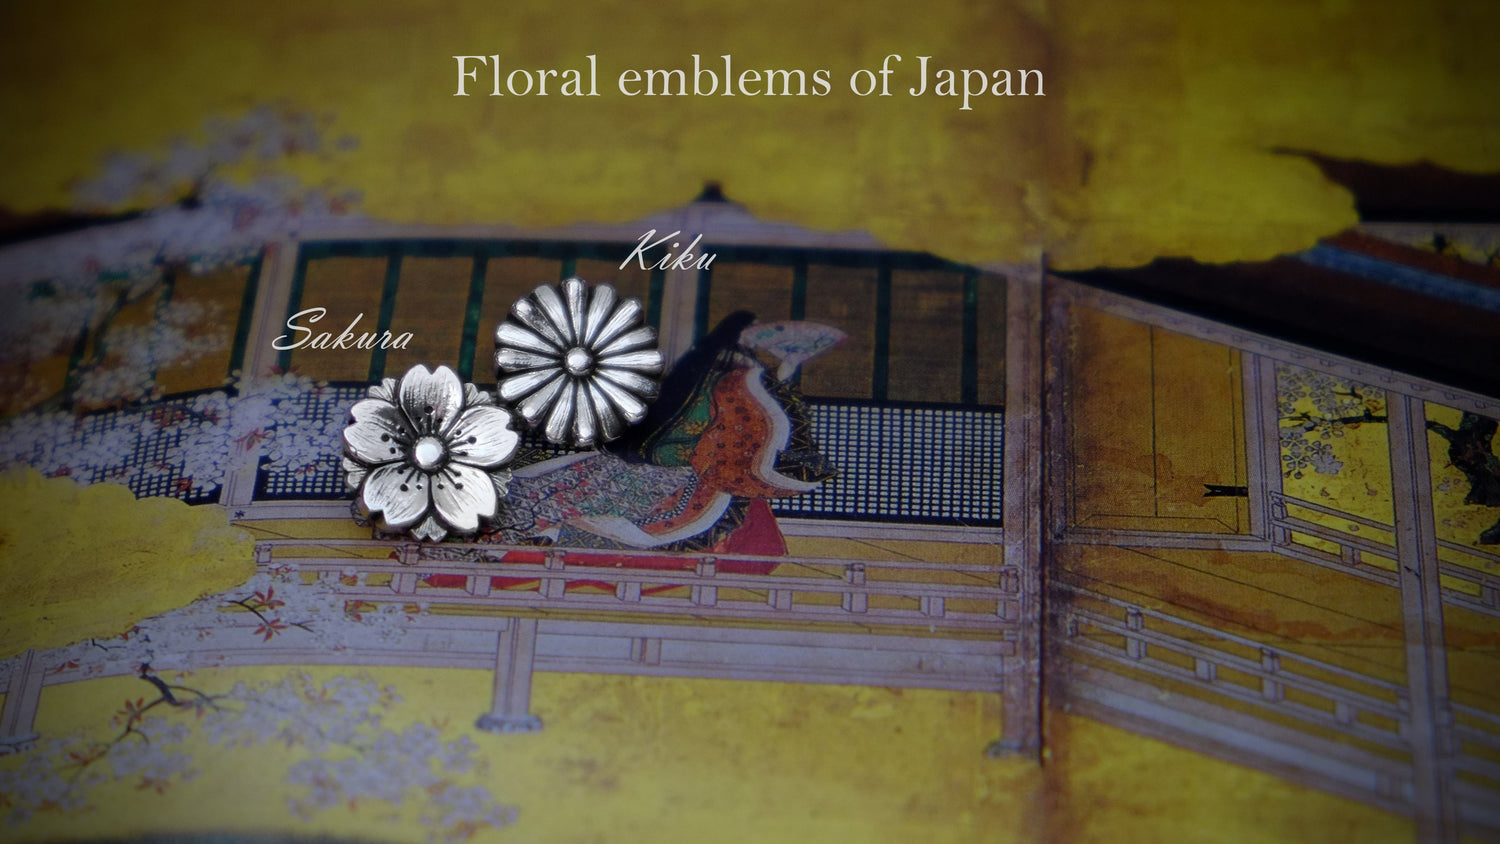 Floral emblems of Japan collection